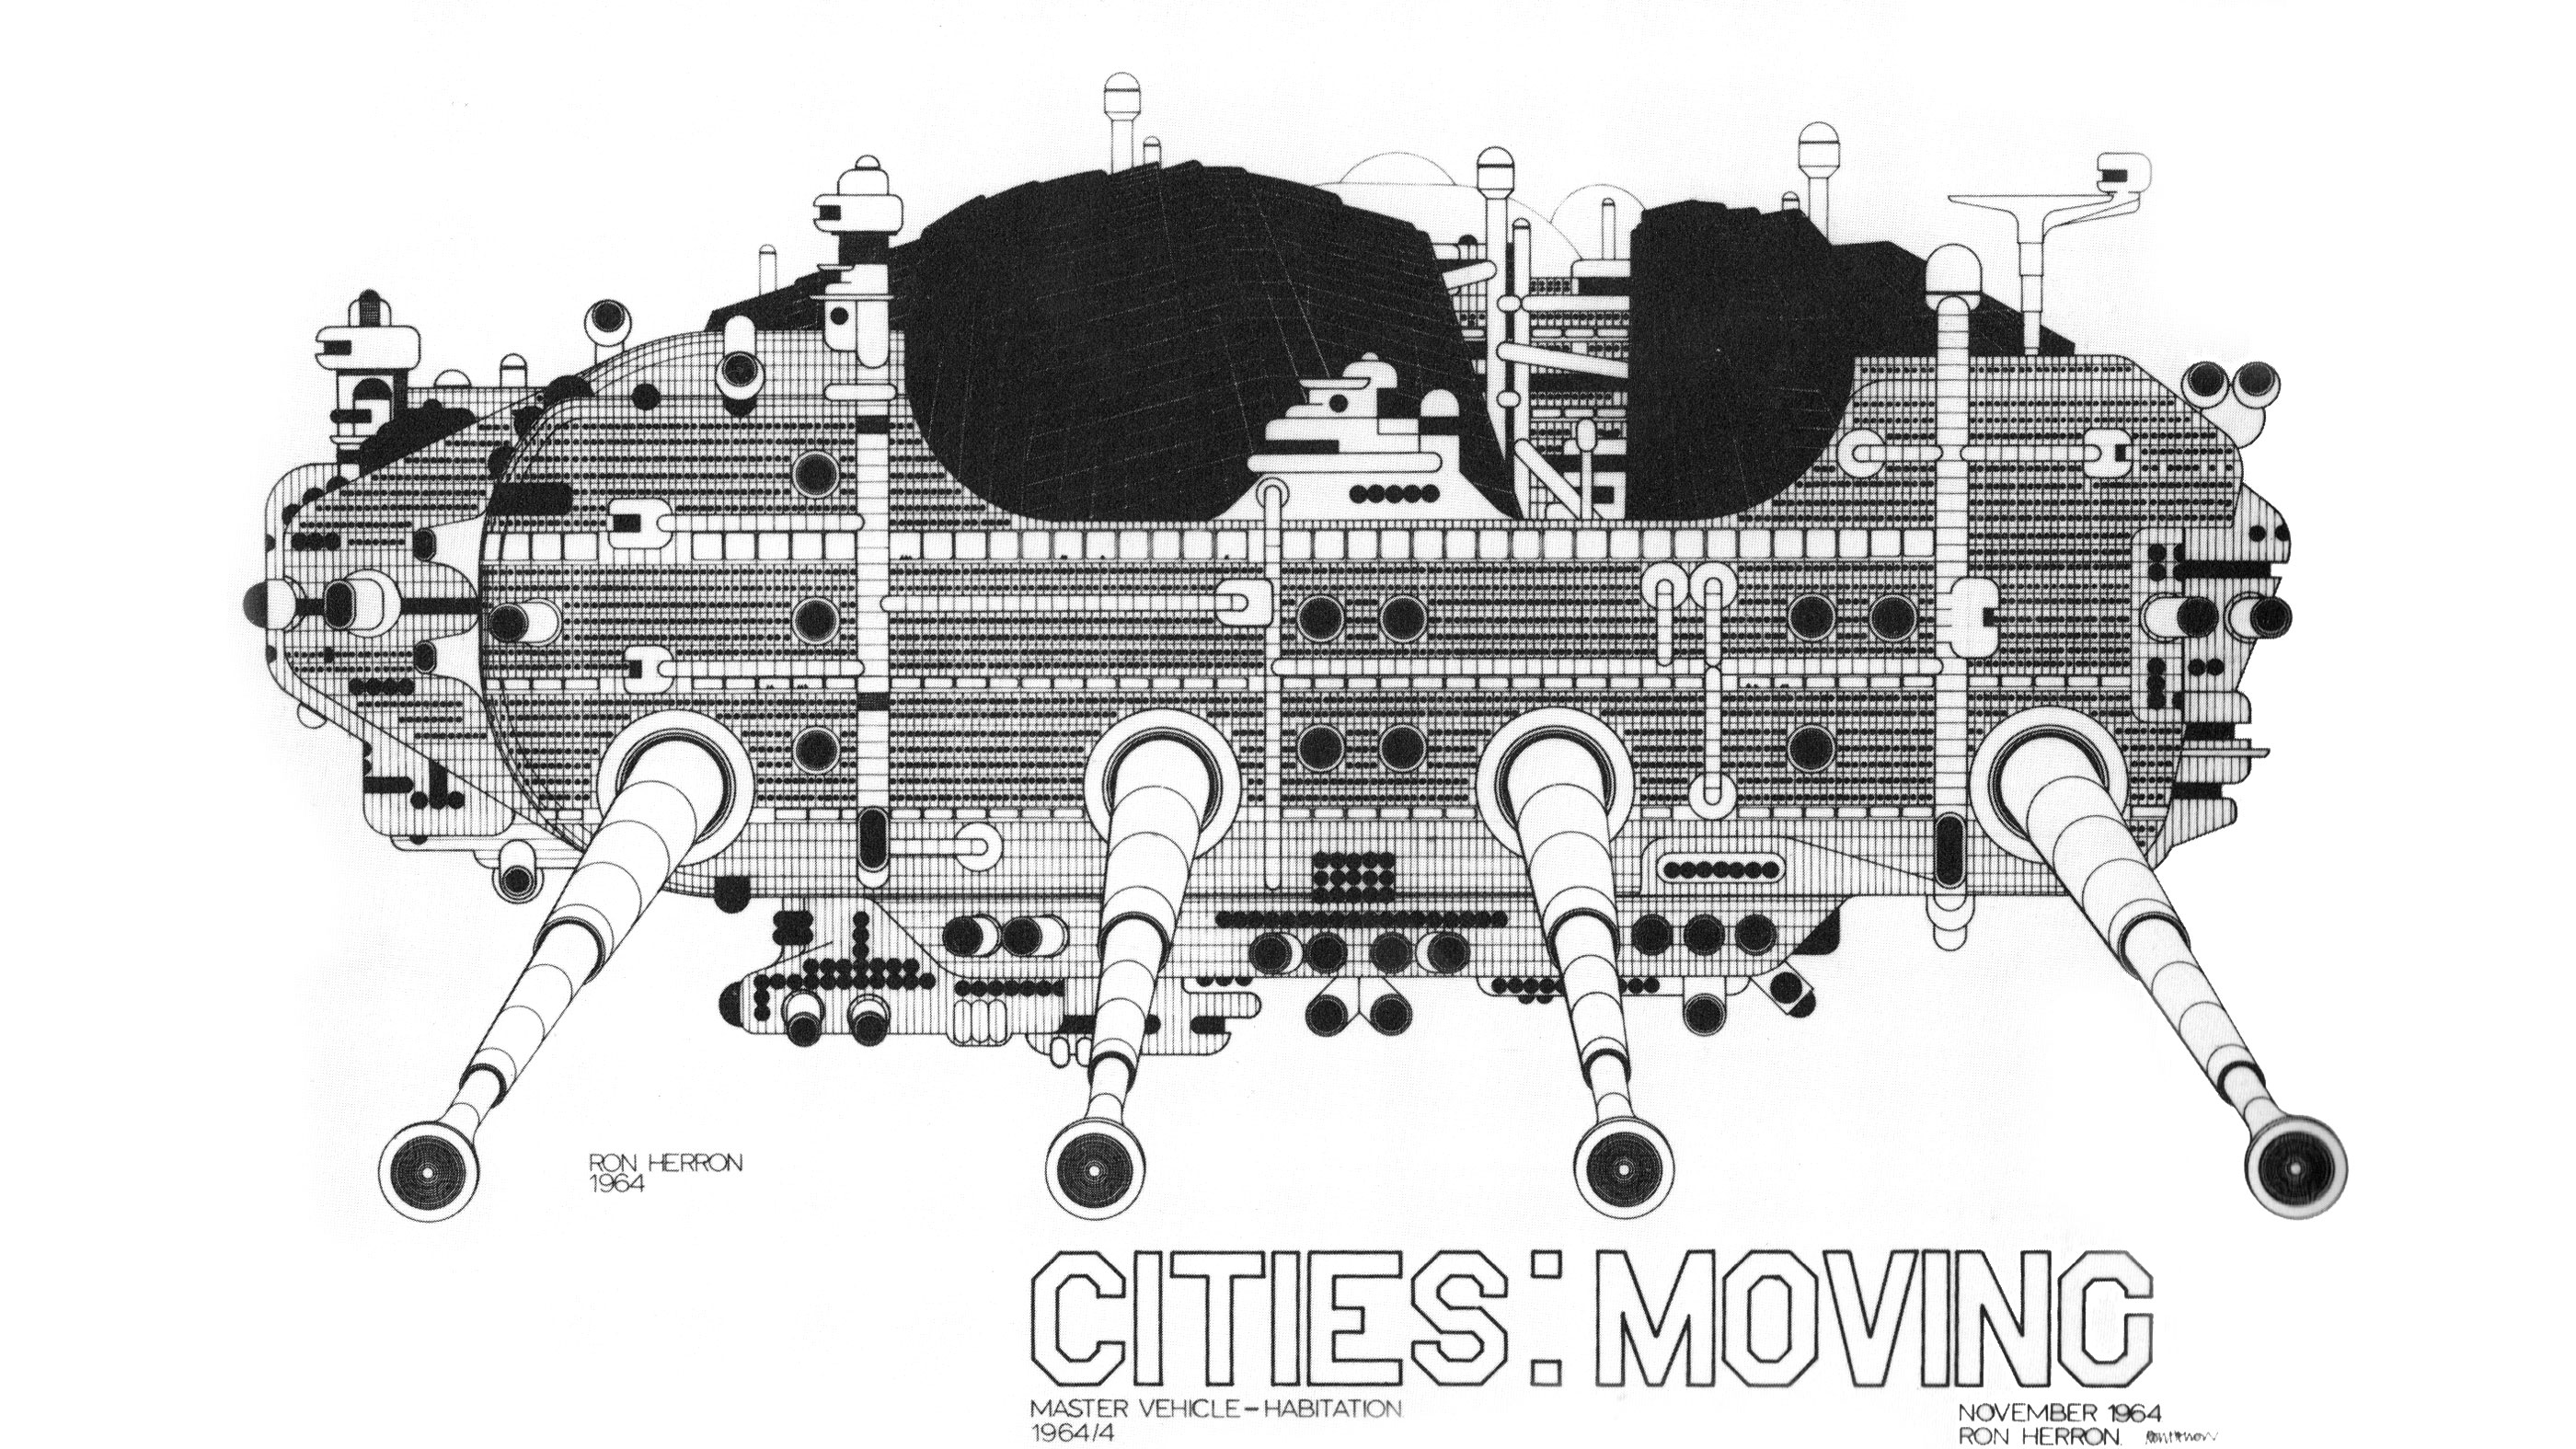 Ron-Herron-cities-moving-1964-archigram